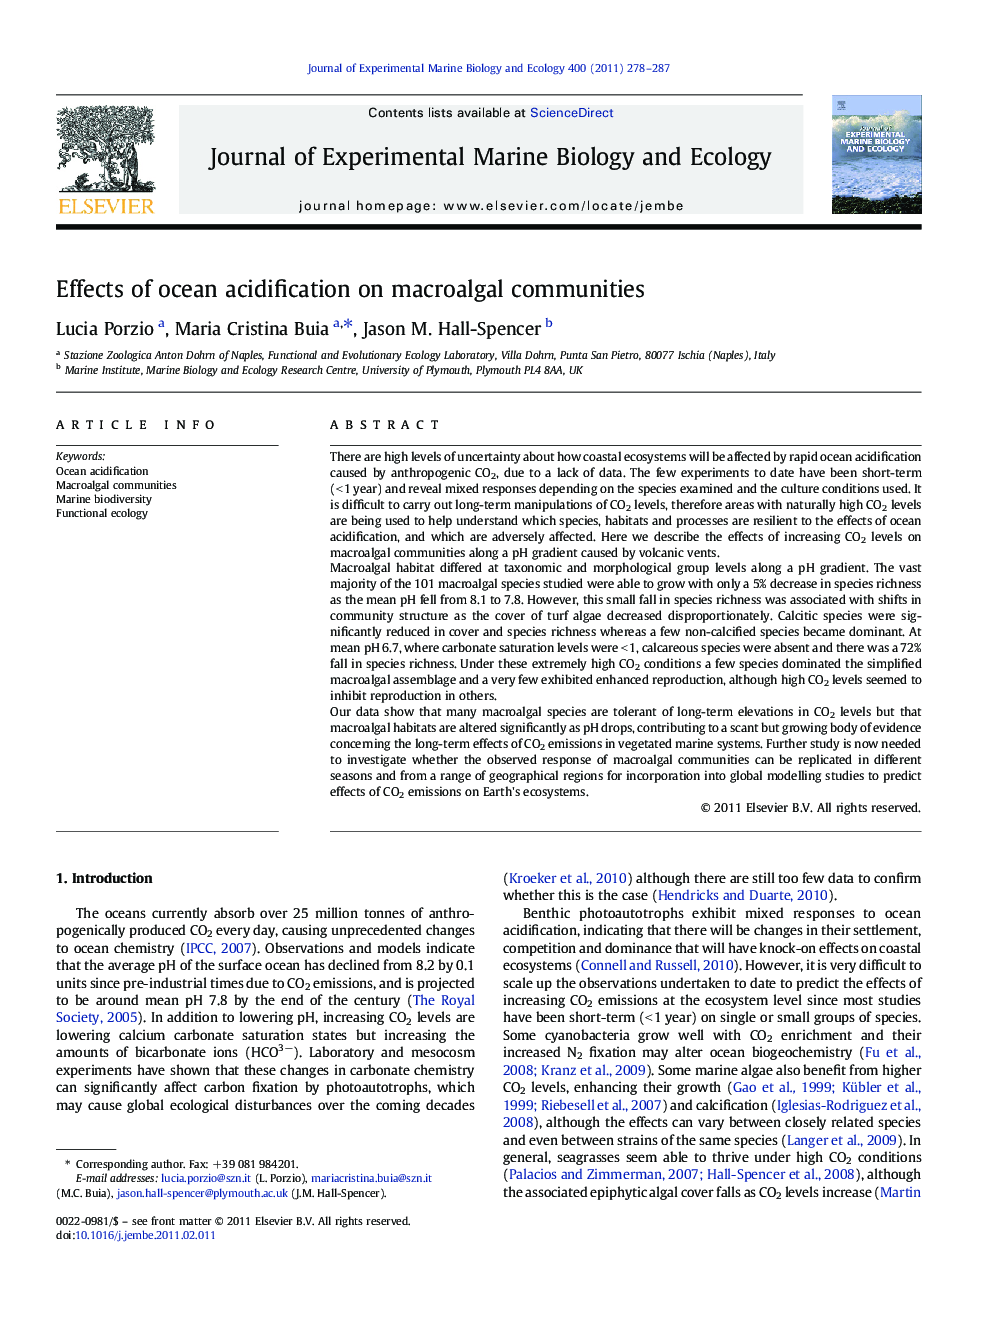 Effects of ocean acidification on macroalgal communities